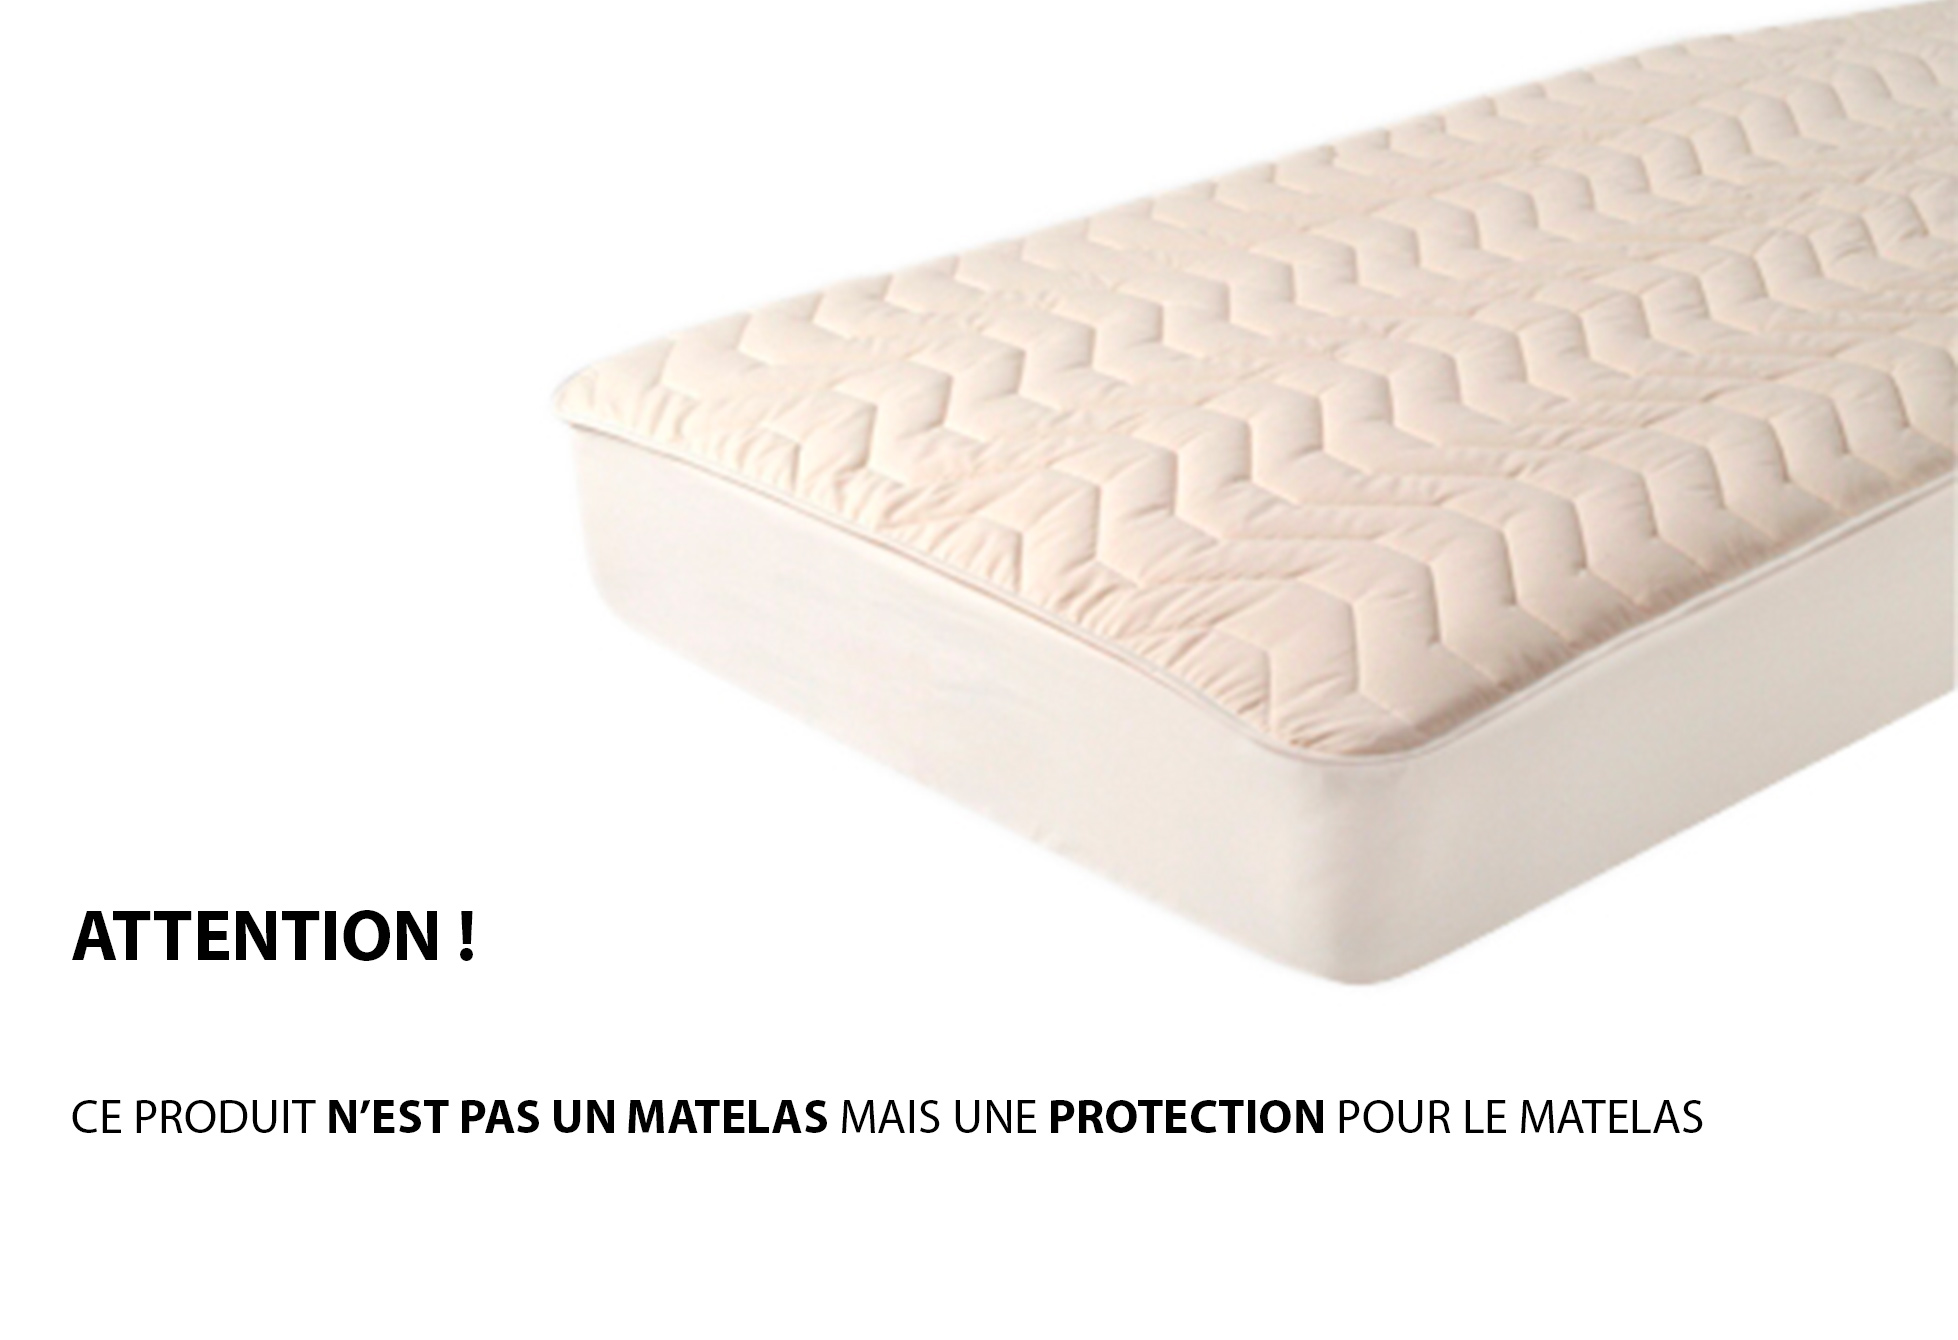 Protège matelas Moshy FLEUR DE COTON PROTECTION  180x200 (King size)